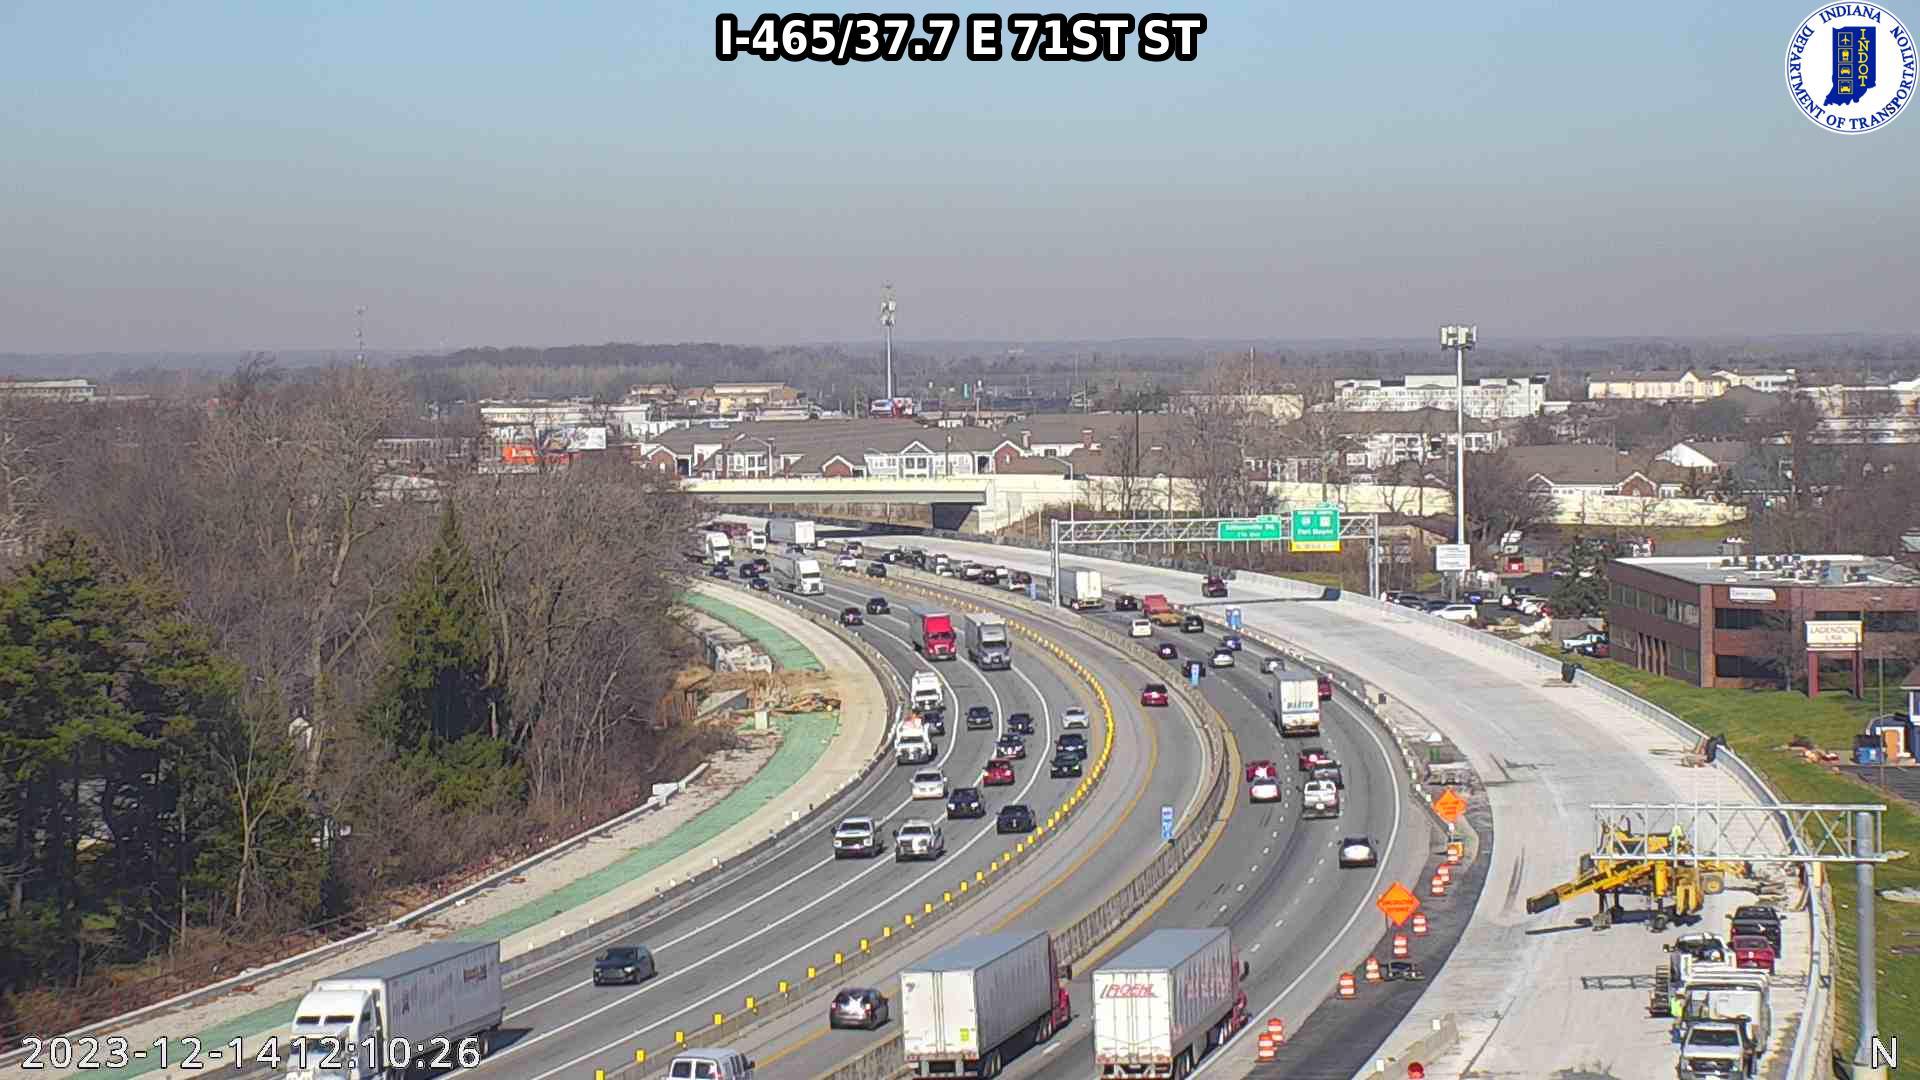 Indianapolis: I-465: I-465/37.7 E 71ST ST : I-465/37.7 E 71ST ST Traffic Camera